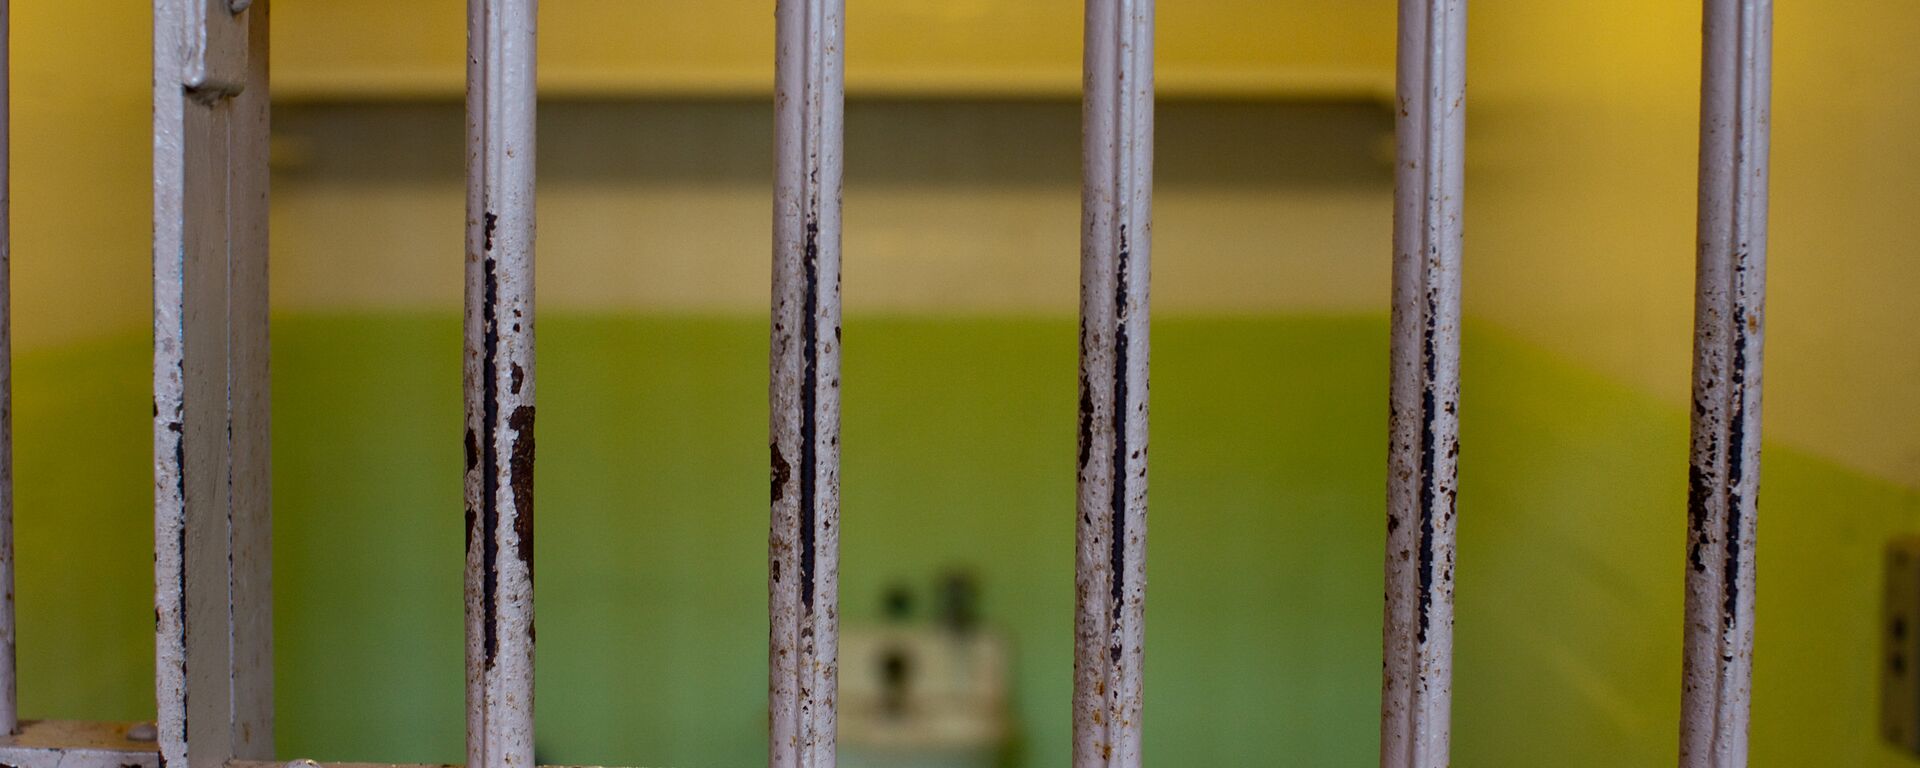 Las rejas de la cárcel (imagen referencial) - Sputnik Mundo, 1920, 03.05.2021